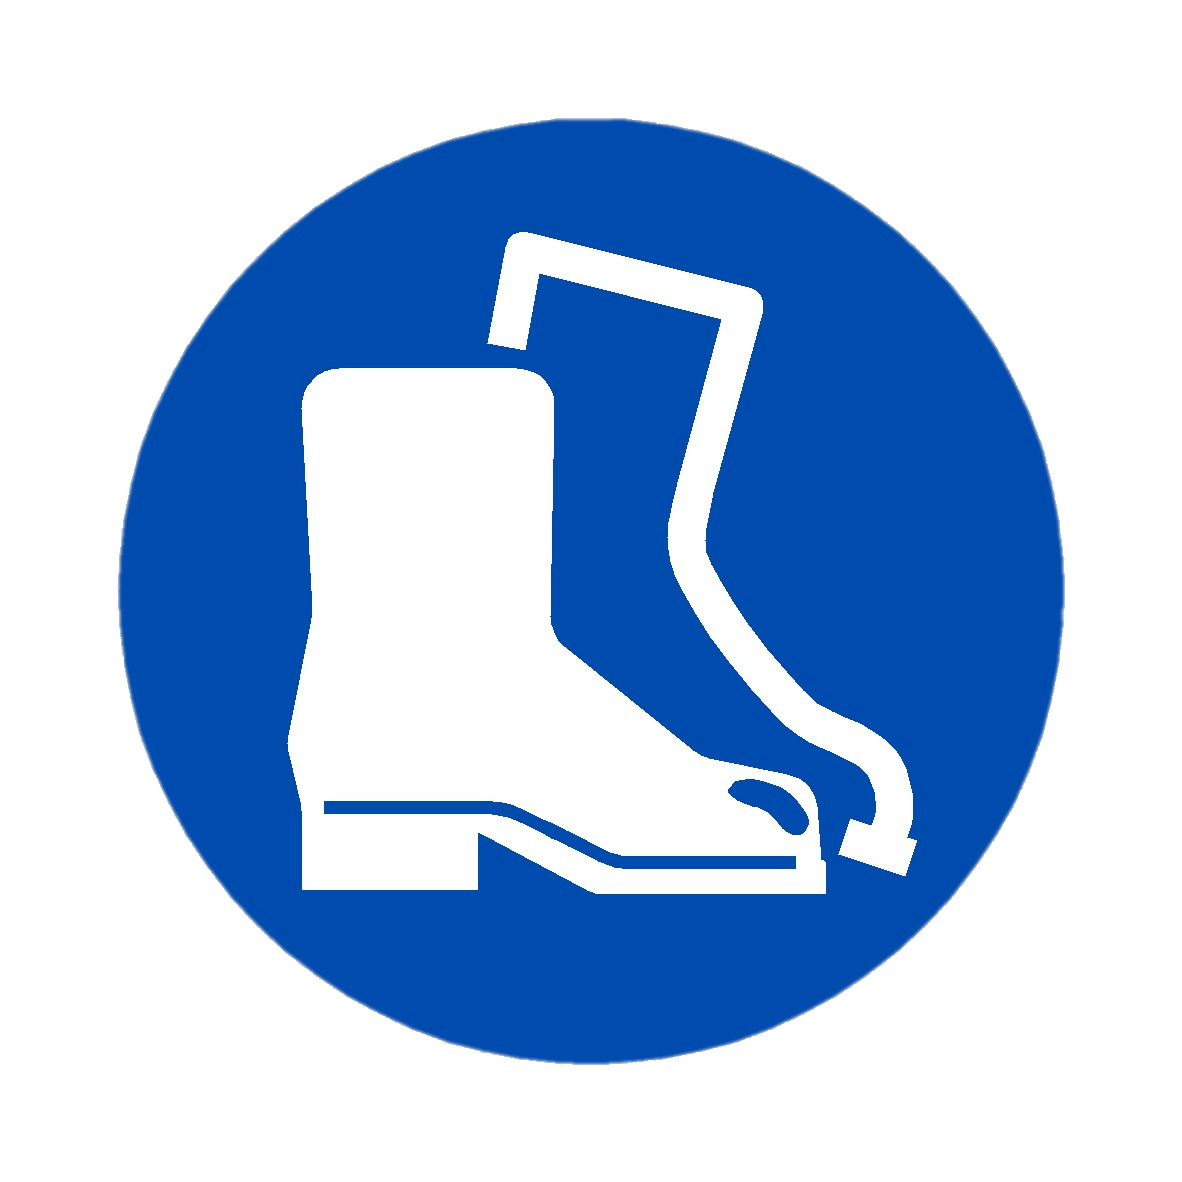 Feet Protection Symbol icons